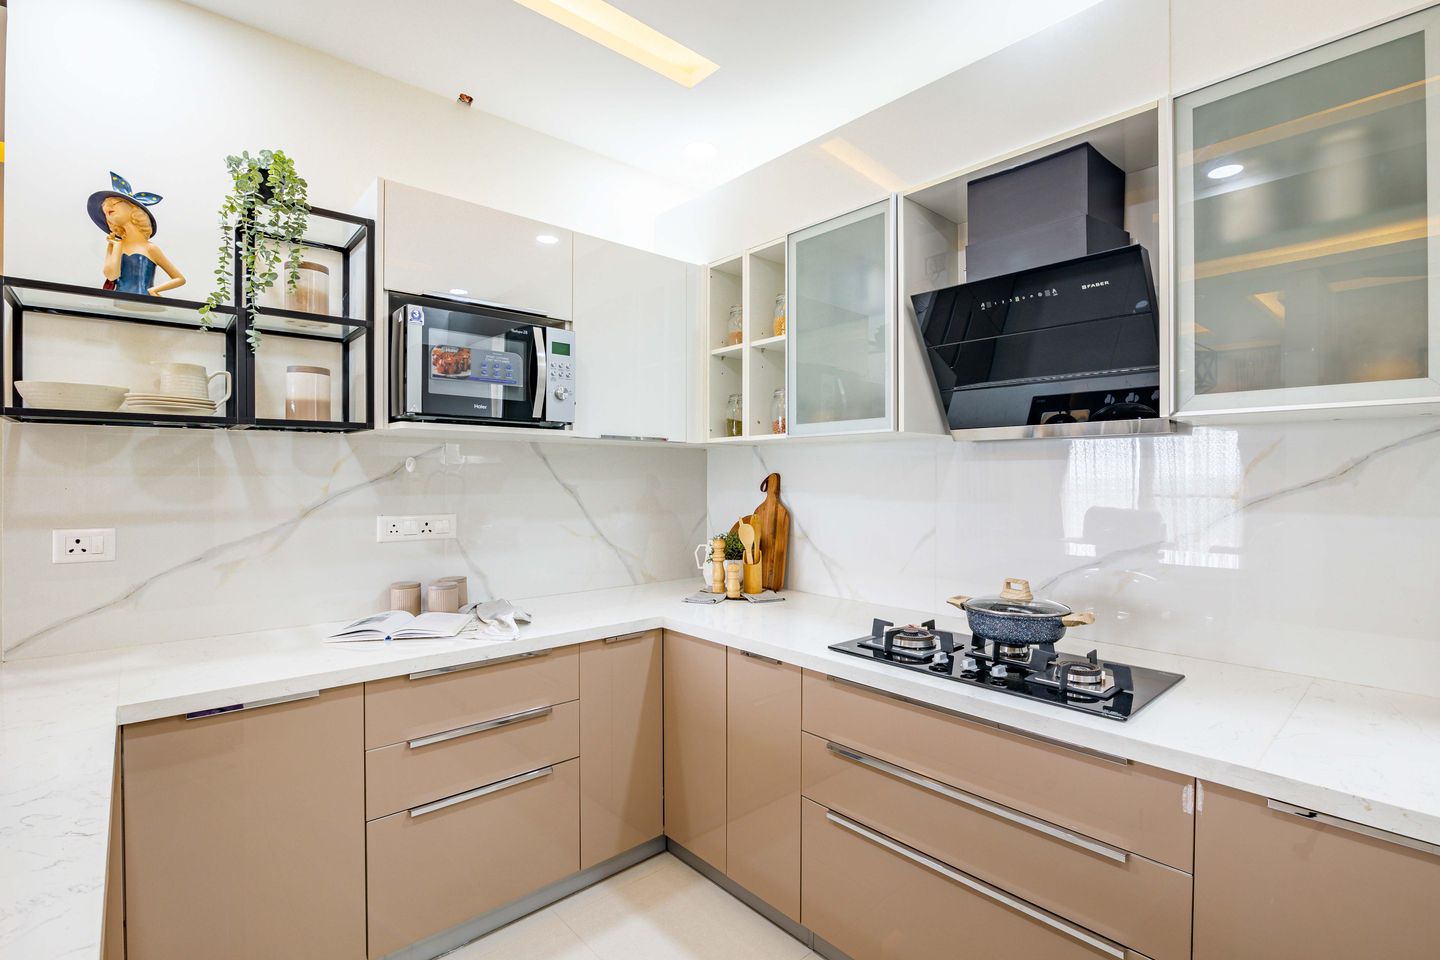 1. White Marble Kitchen Tile Design For Kitchen Backsplash - Livspace 2. Glossy White Marble Kitchen Tile Design For Kitchen With Breakfast Counter - Livspace